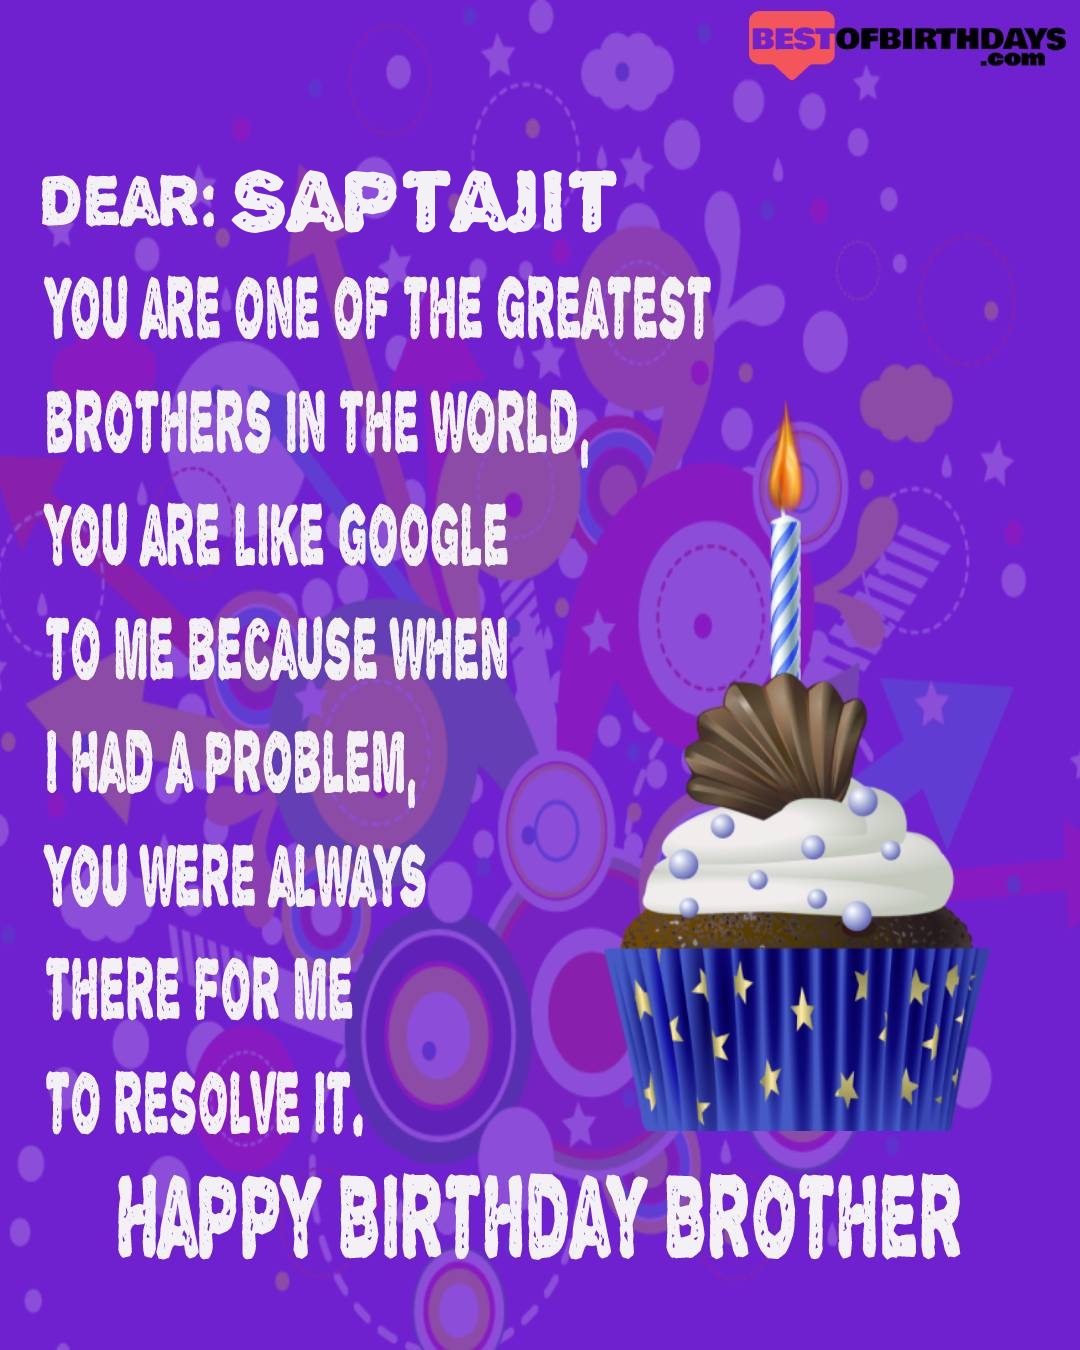 Happy birthday saptajit bhai brother bro